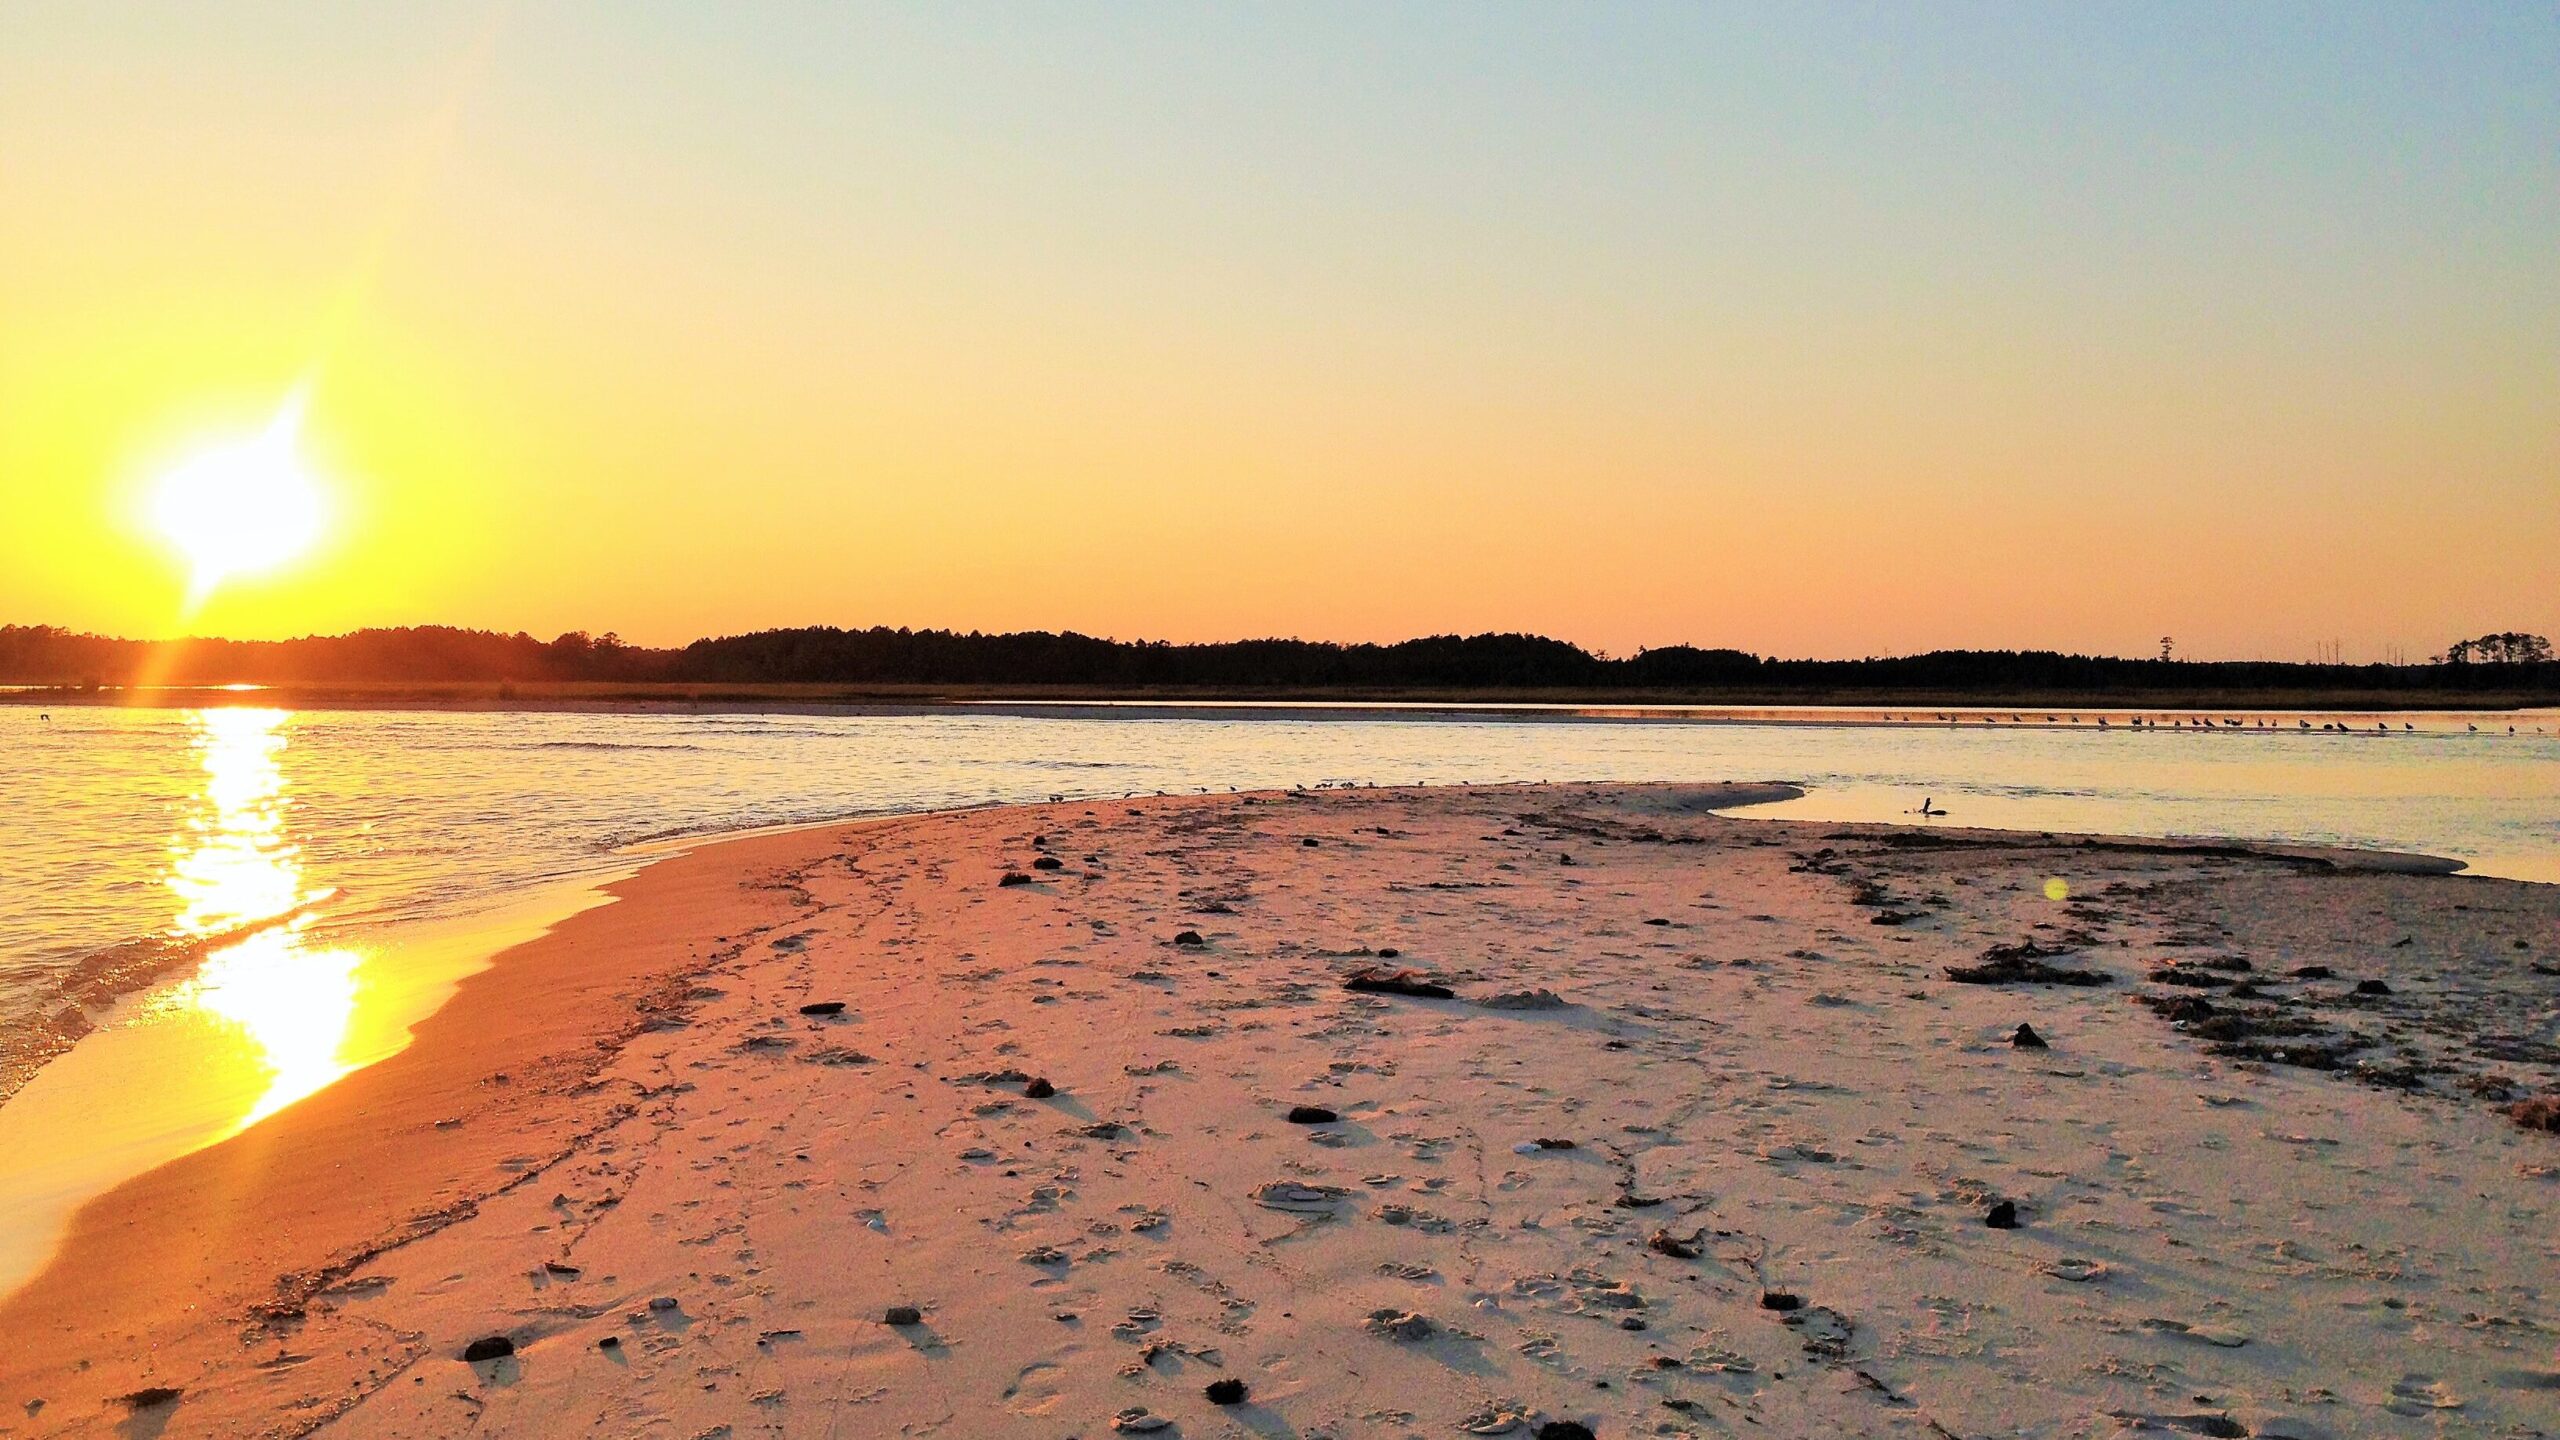 Mathews county beaches have amazing sunsets.